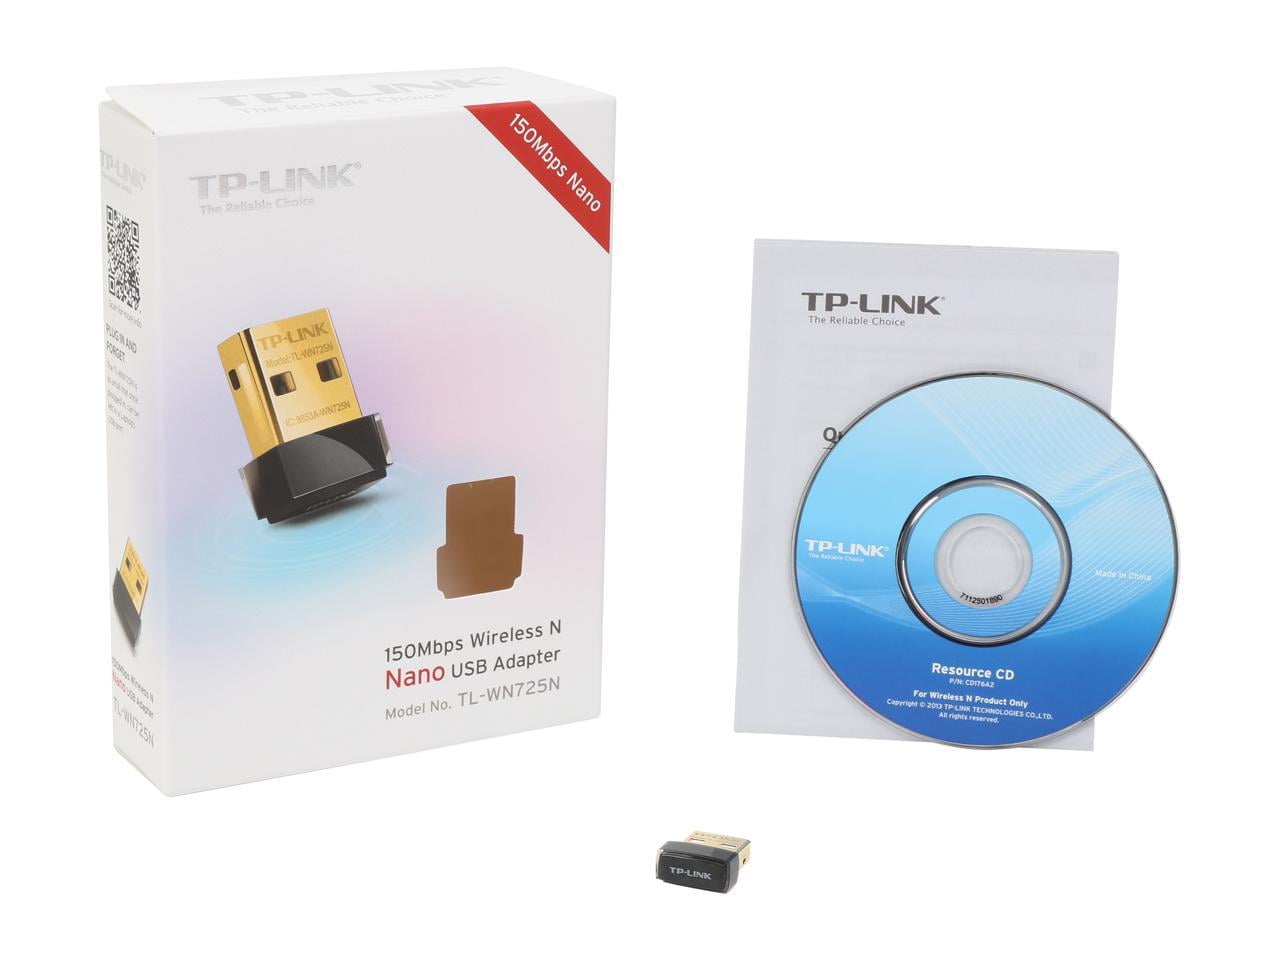 Адаптер tl wn725n. WIFI адаптер TP-link TL-wn725n. Nano USB Adapter Wireless TL-wn725n. Адаптер Wi-Fi USB TP-link TL-wn725n n150, 150mb/s 2.4GHZ, 1 антенна, USB 2.0. TL-link-wn725n Wireless n Nano USB Adapter, Nano Size.